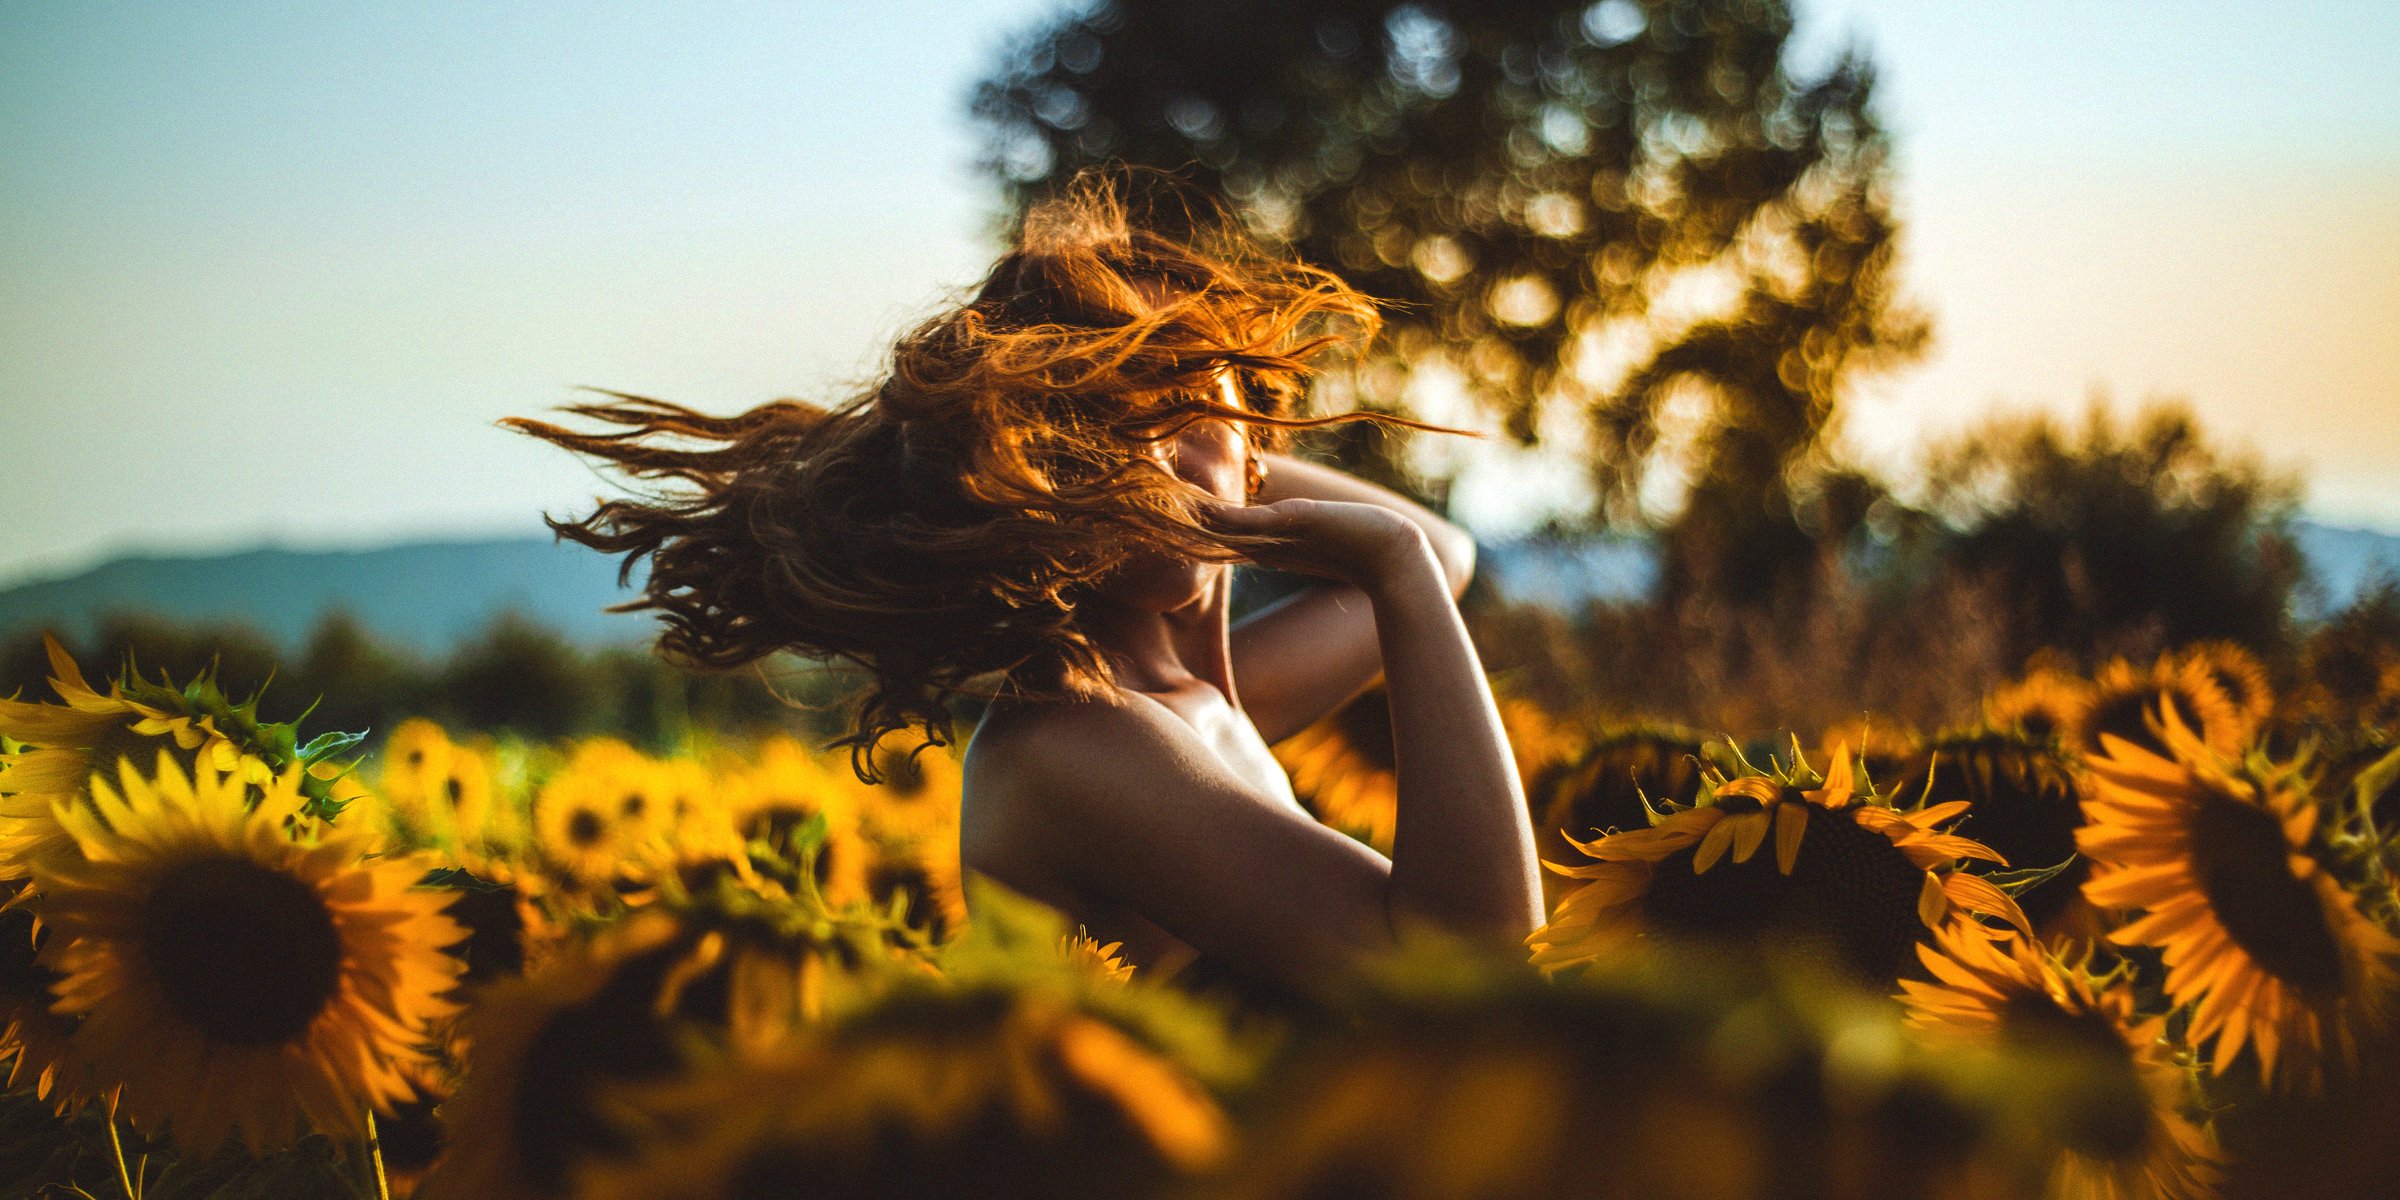  Unsplash | A woman dancing in a field of sunflowers